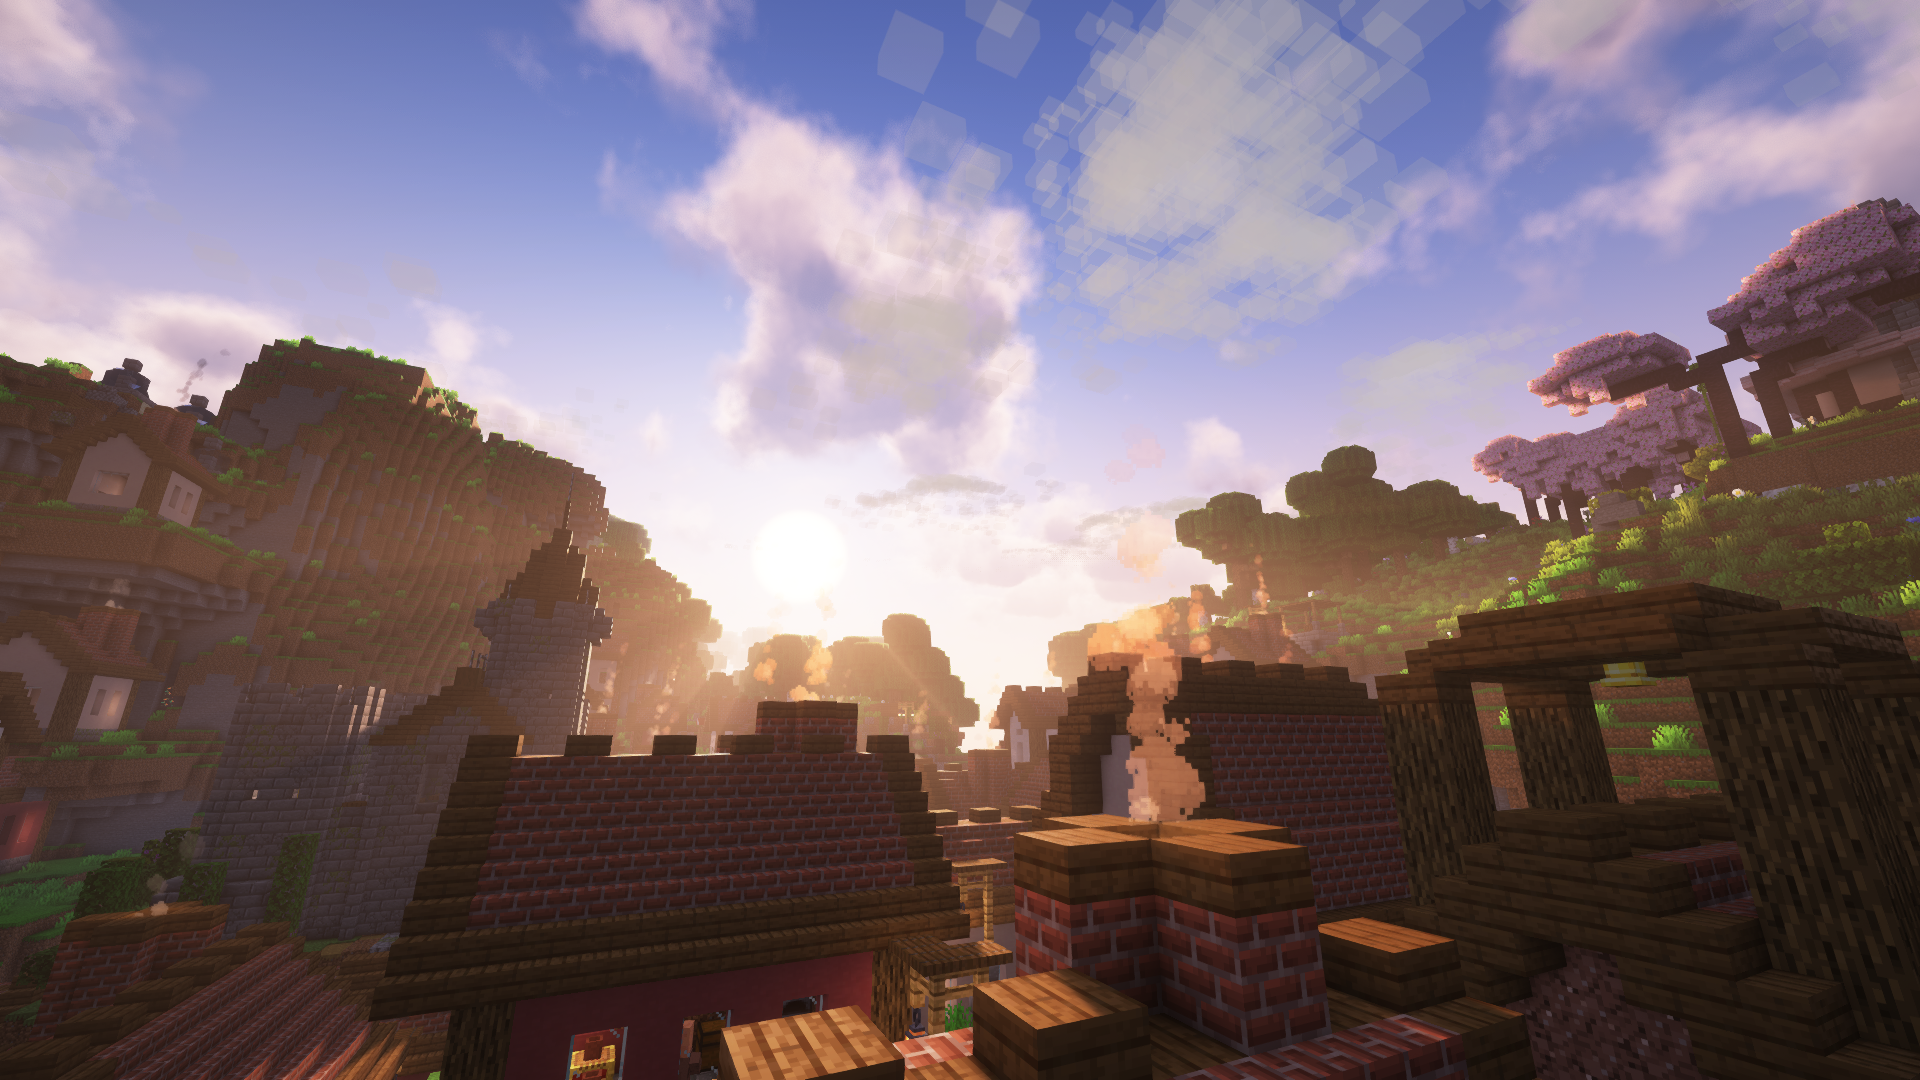 A Village illuminated by the sunrise